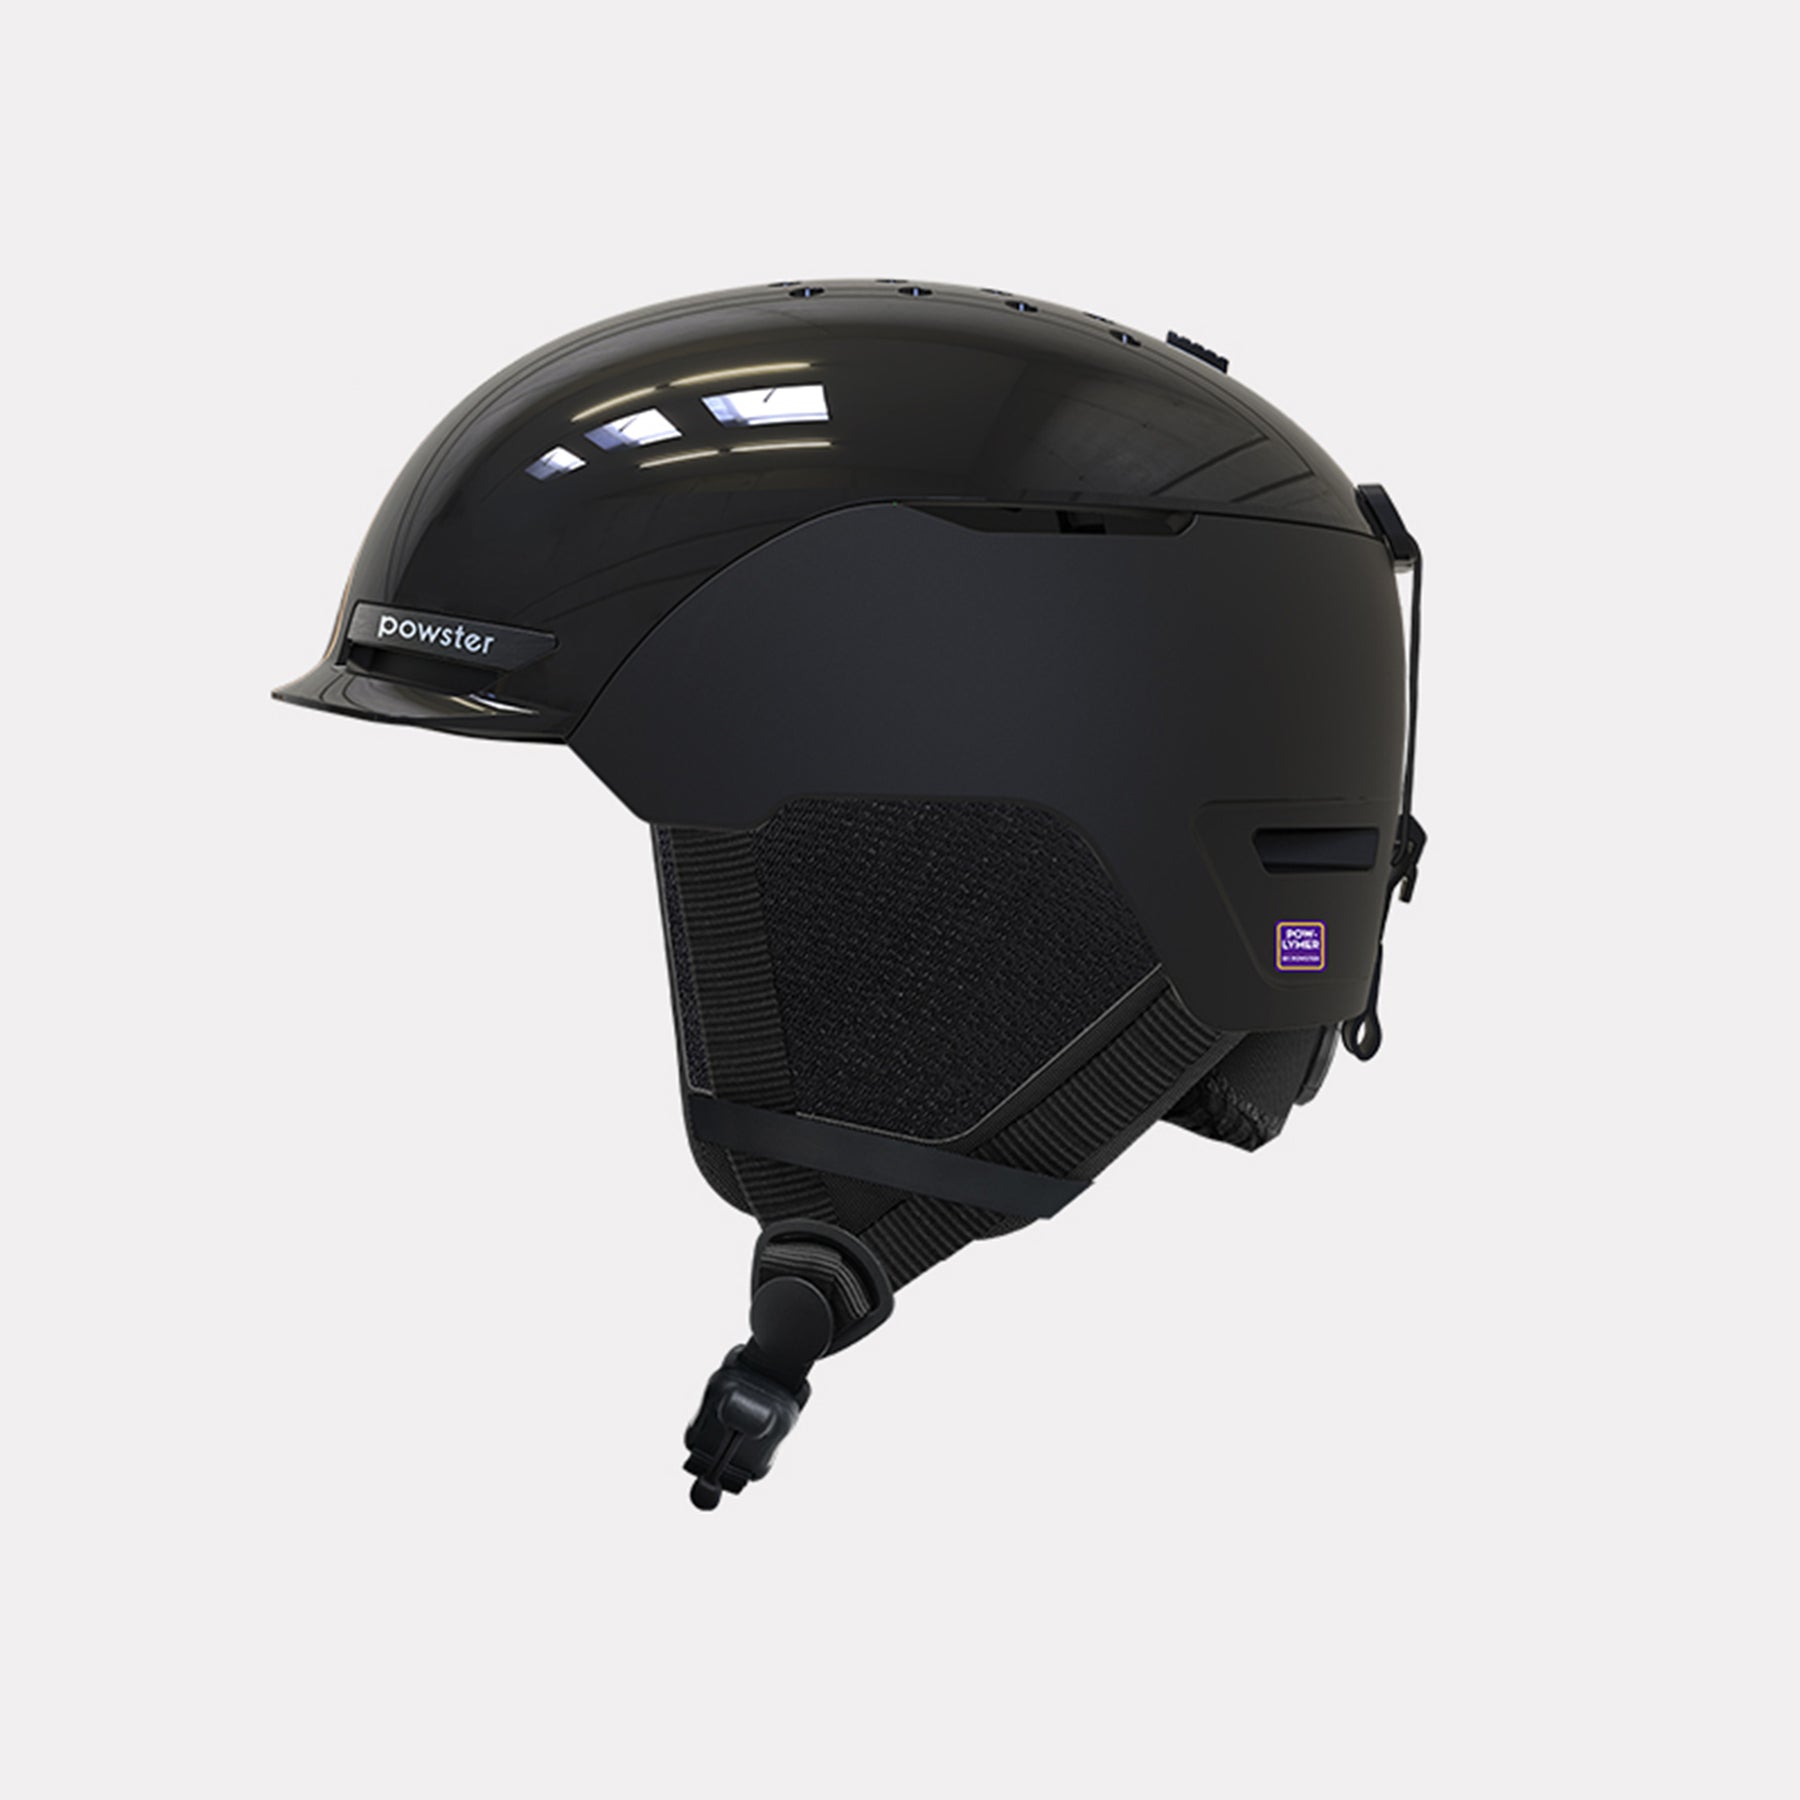 Cavalier ABS Ski Helmet With Visor